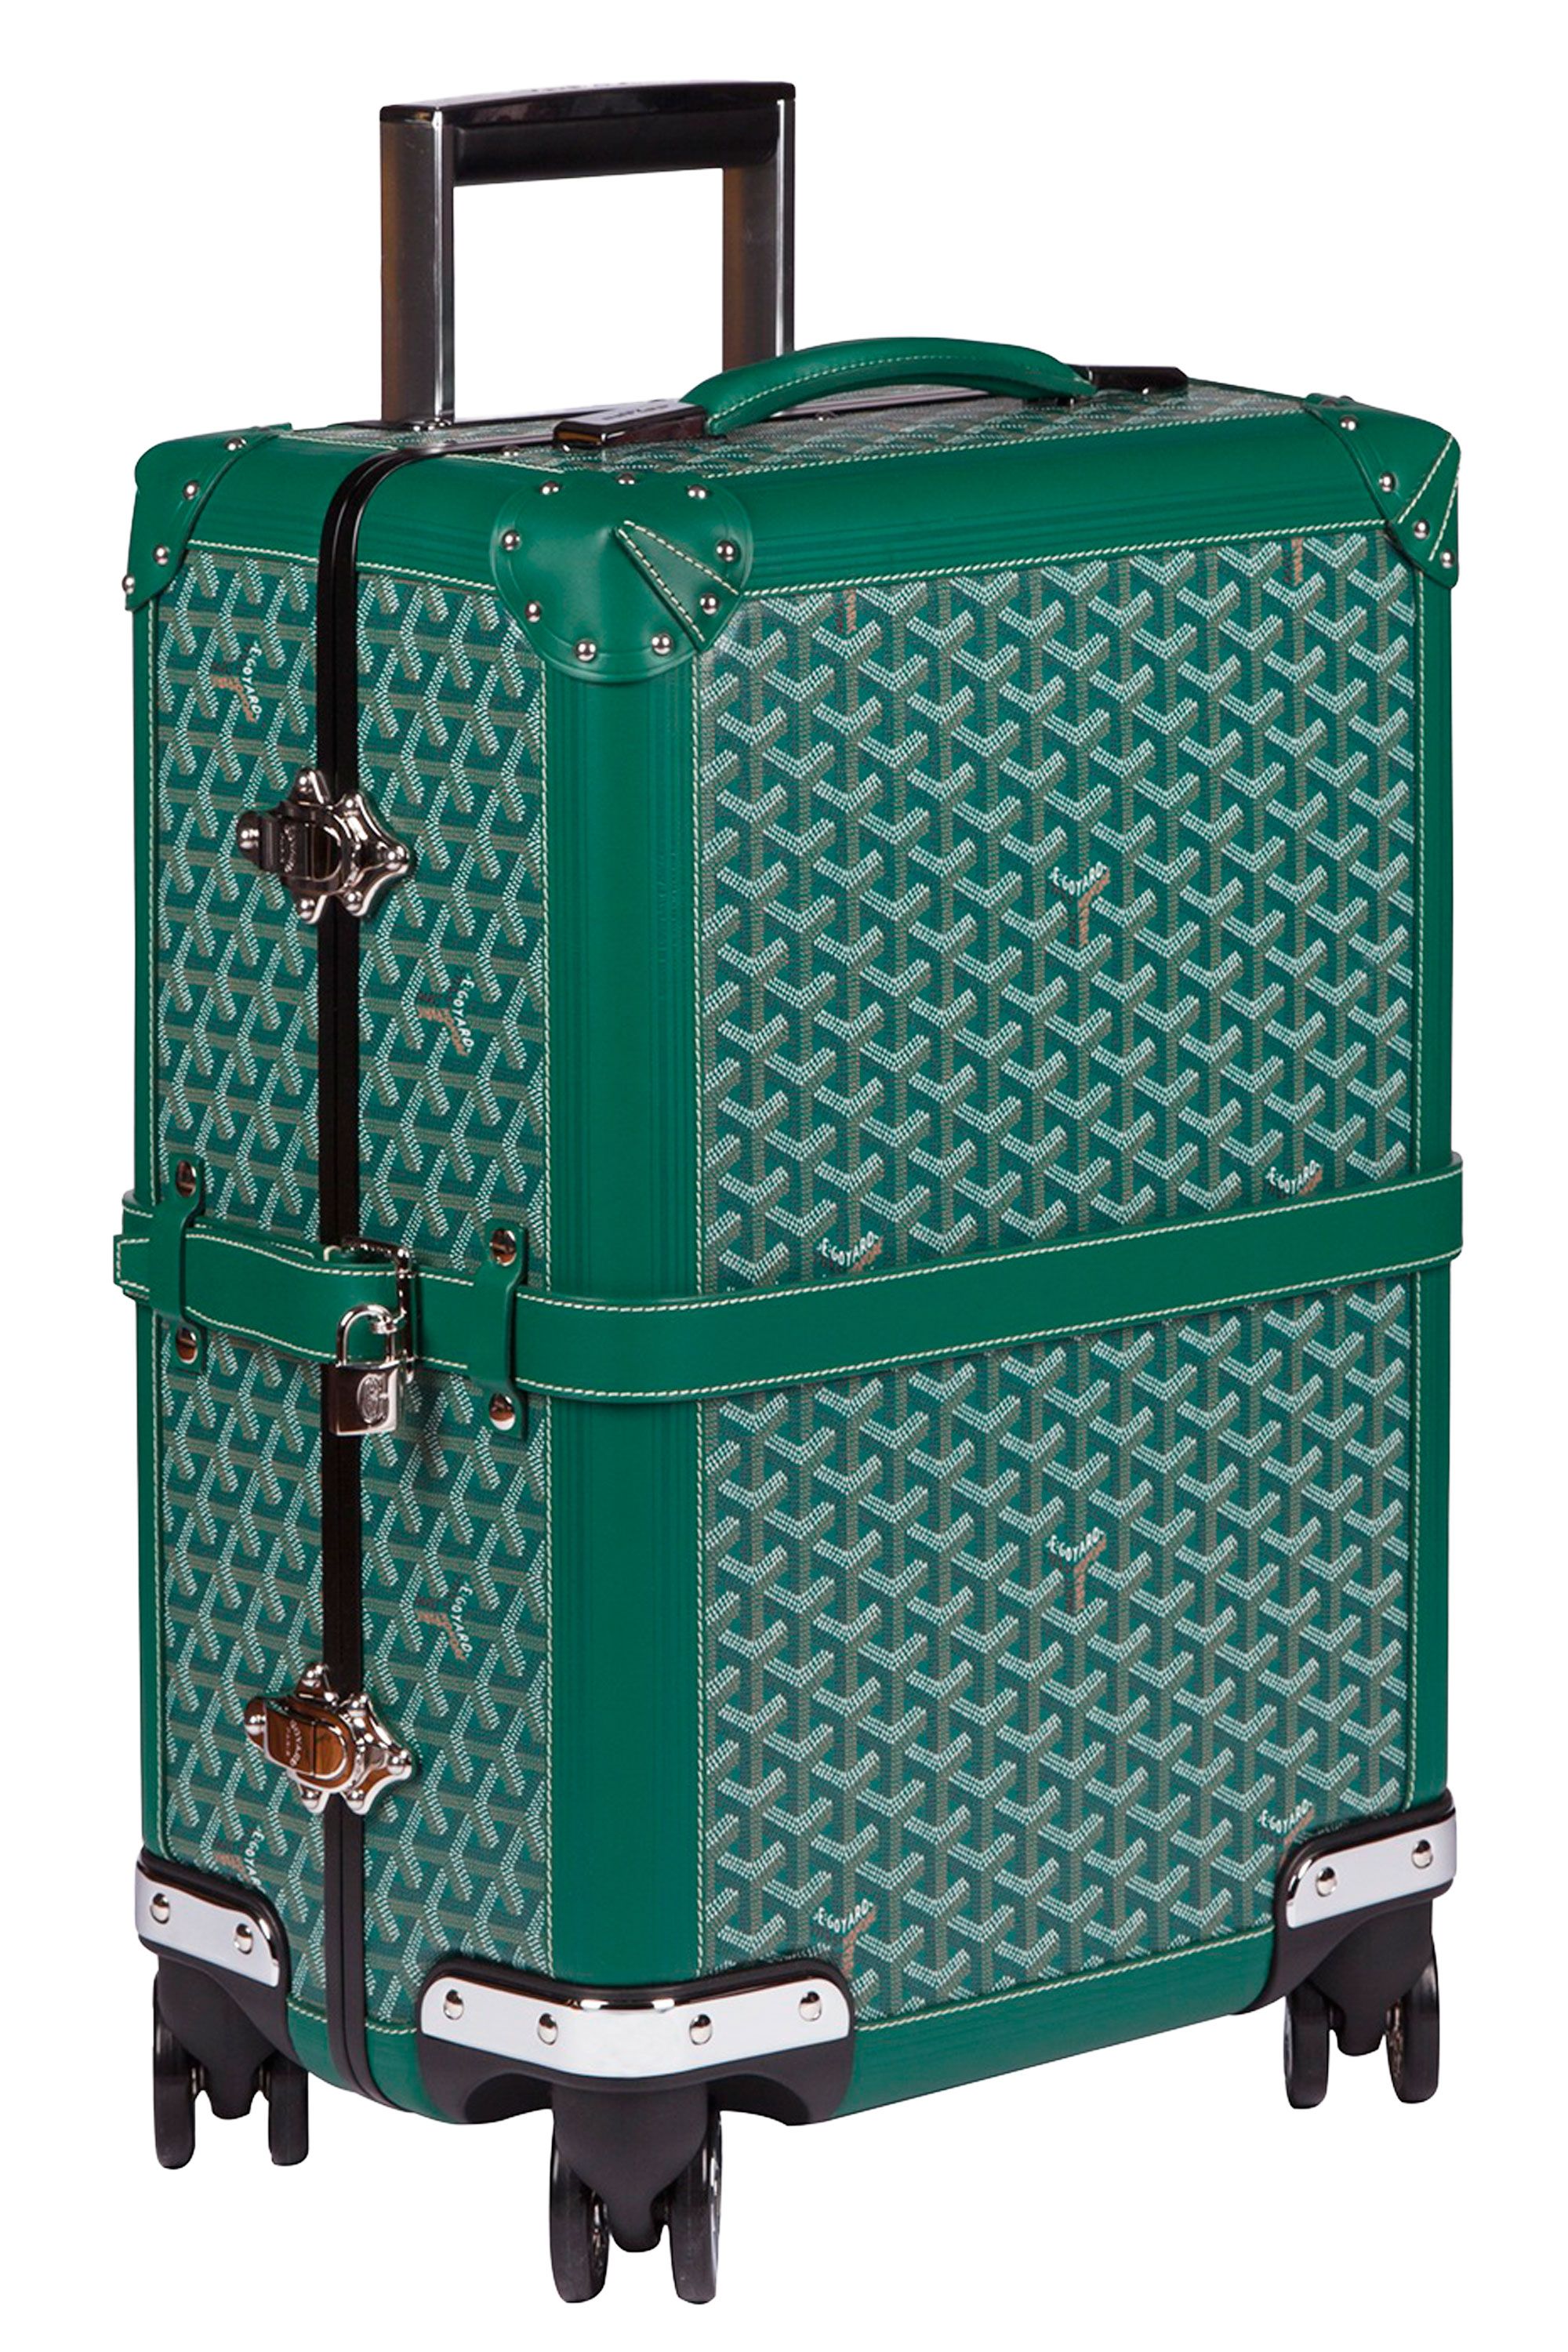 Designer Luggage Brands - Luxury Baggage